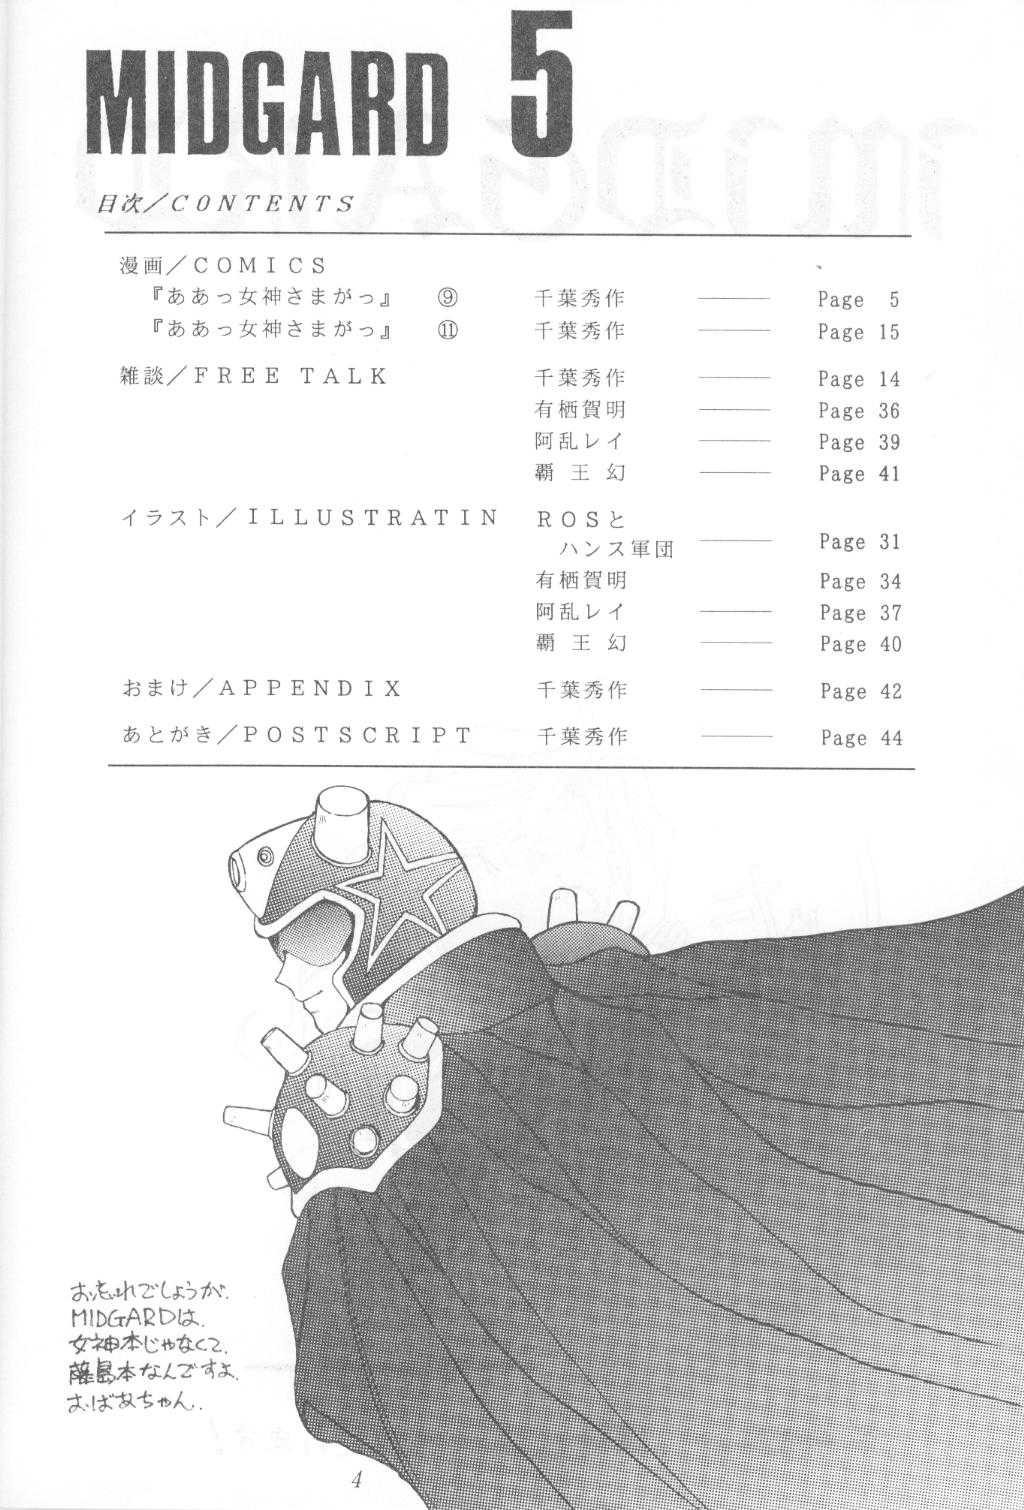 [CIRCLE OUTER WORLD] MIDGARD 5(Ah! Megami-sama/Ah! My Goddess) [サークルOUTERWORLD] MIDGARD 5 (ああっ女神さまっ)